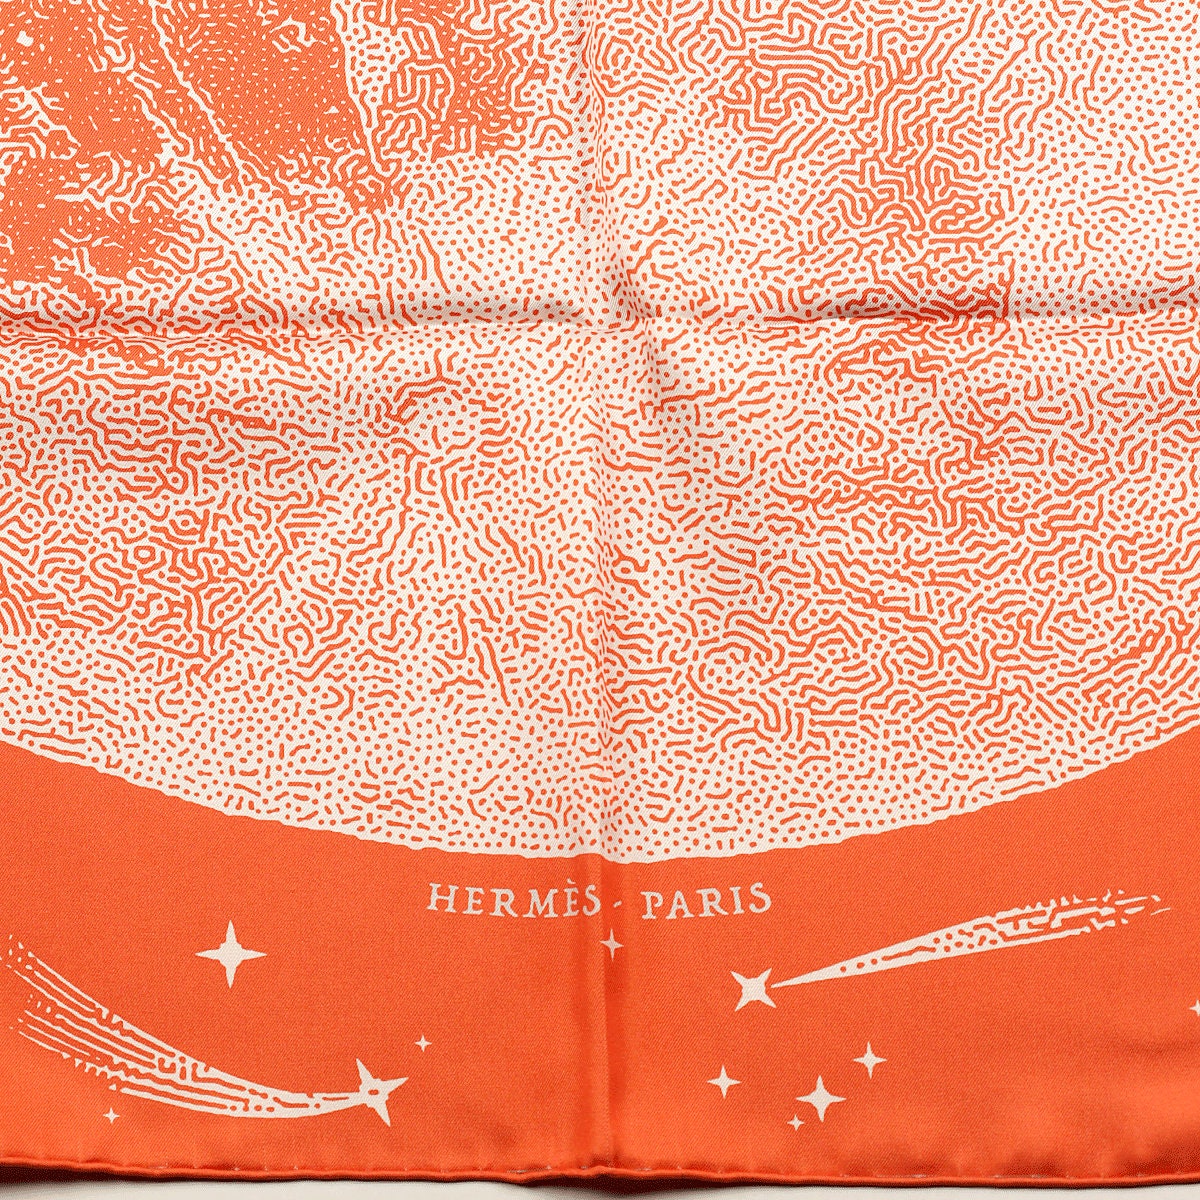 Hermes Scarf "Clair de Lune" by Dimitri Rybaltchenko 90cm Silk Double Face Carre